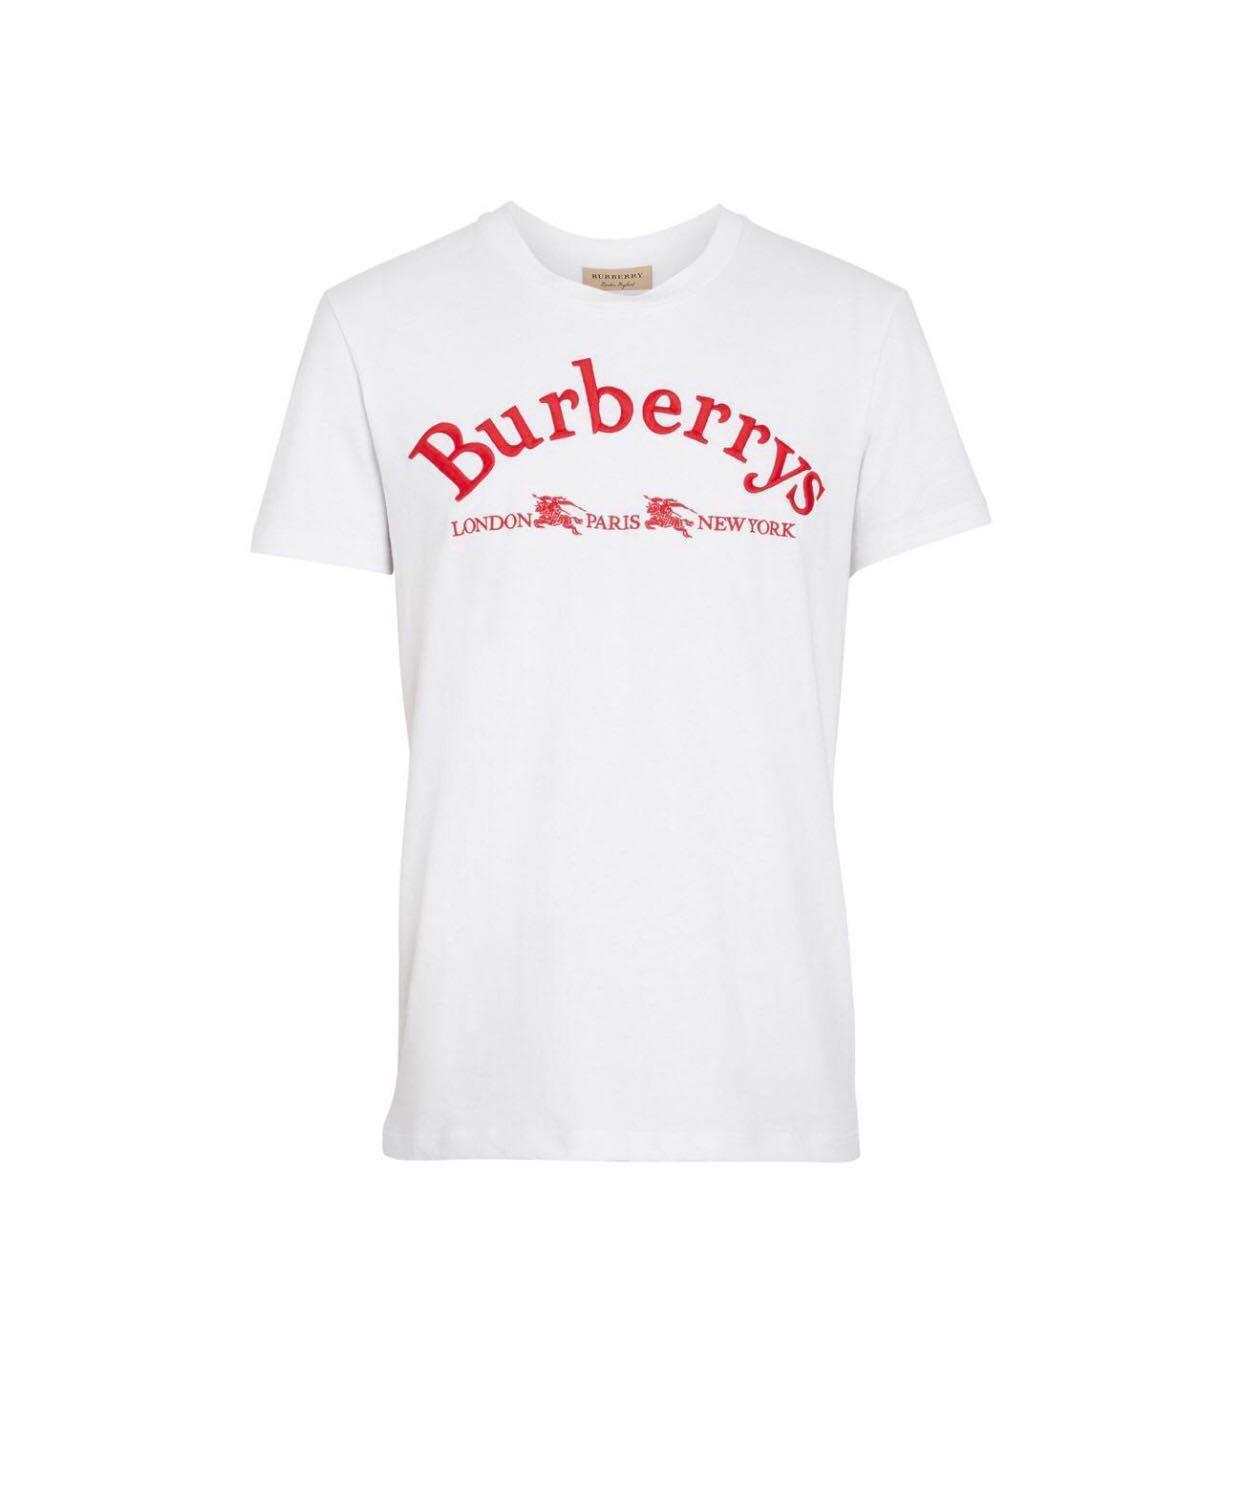 burberry t shirt mens 2018